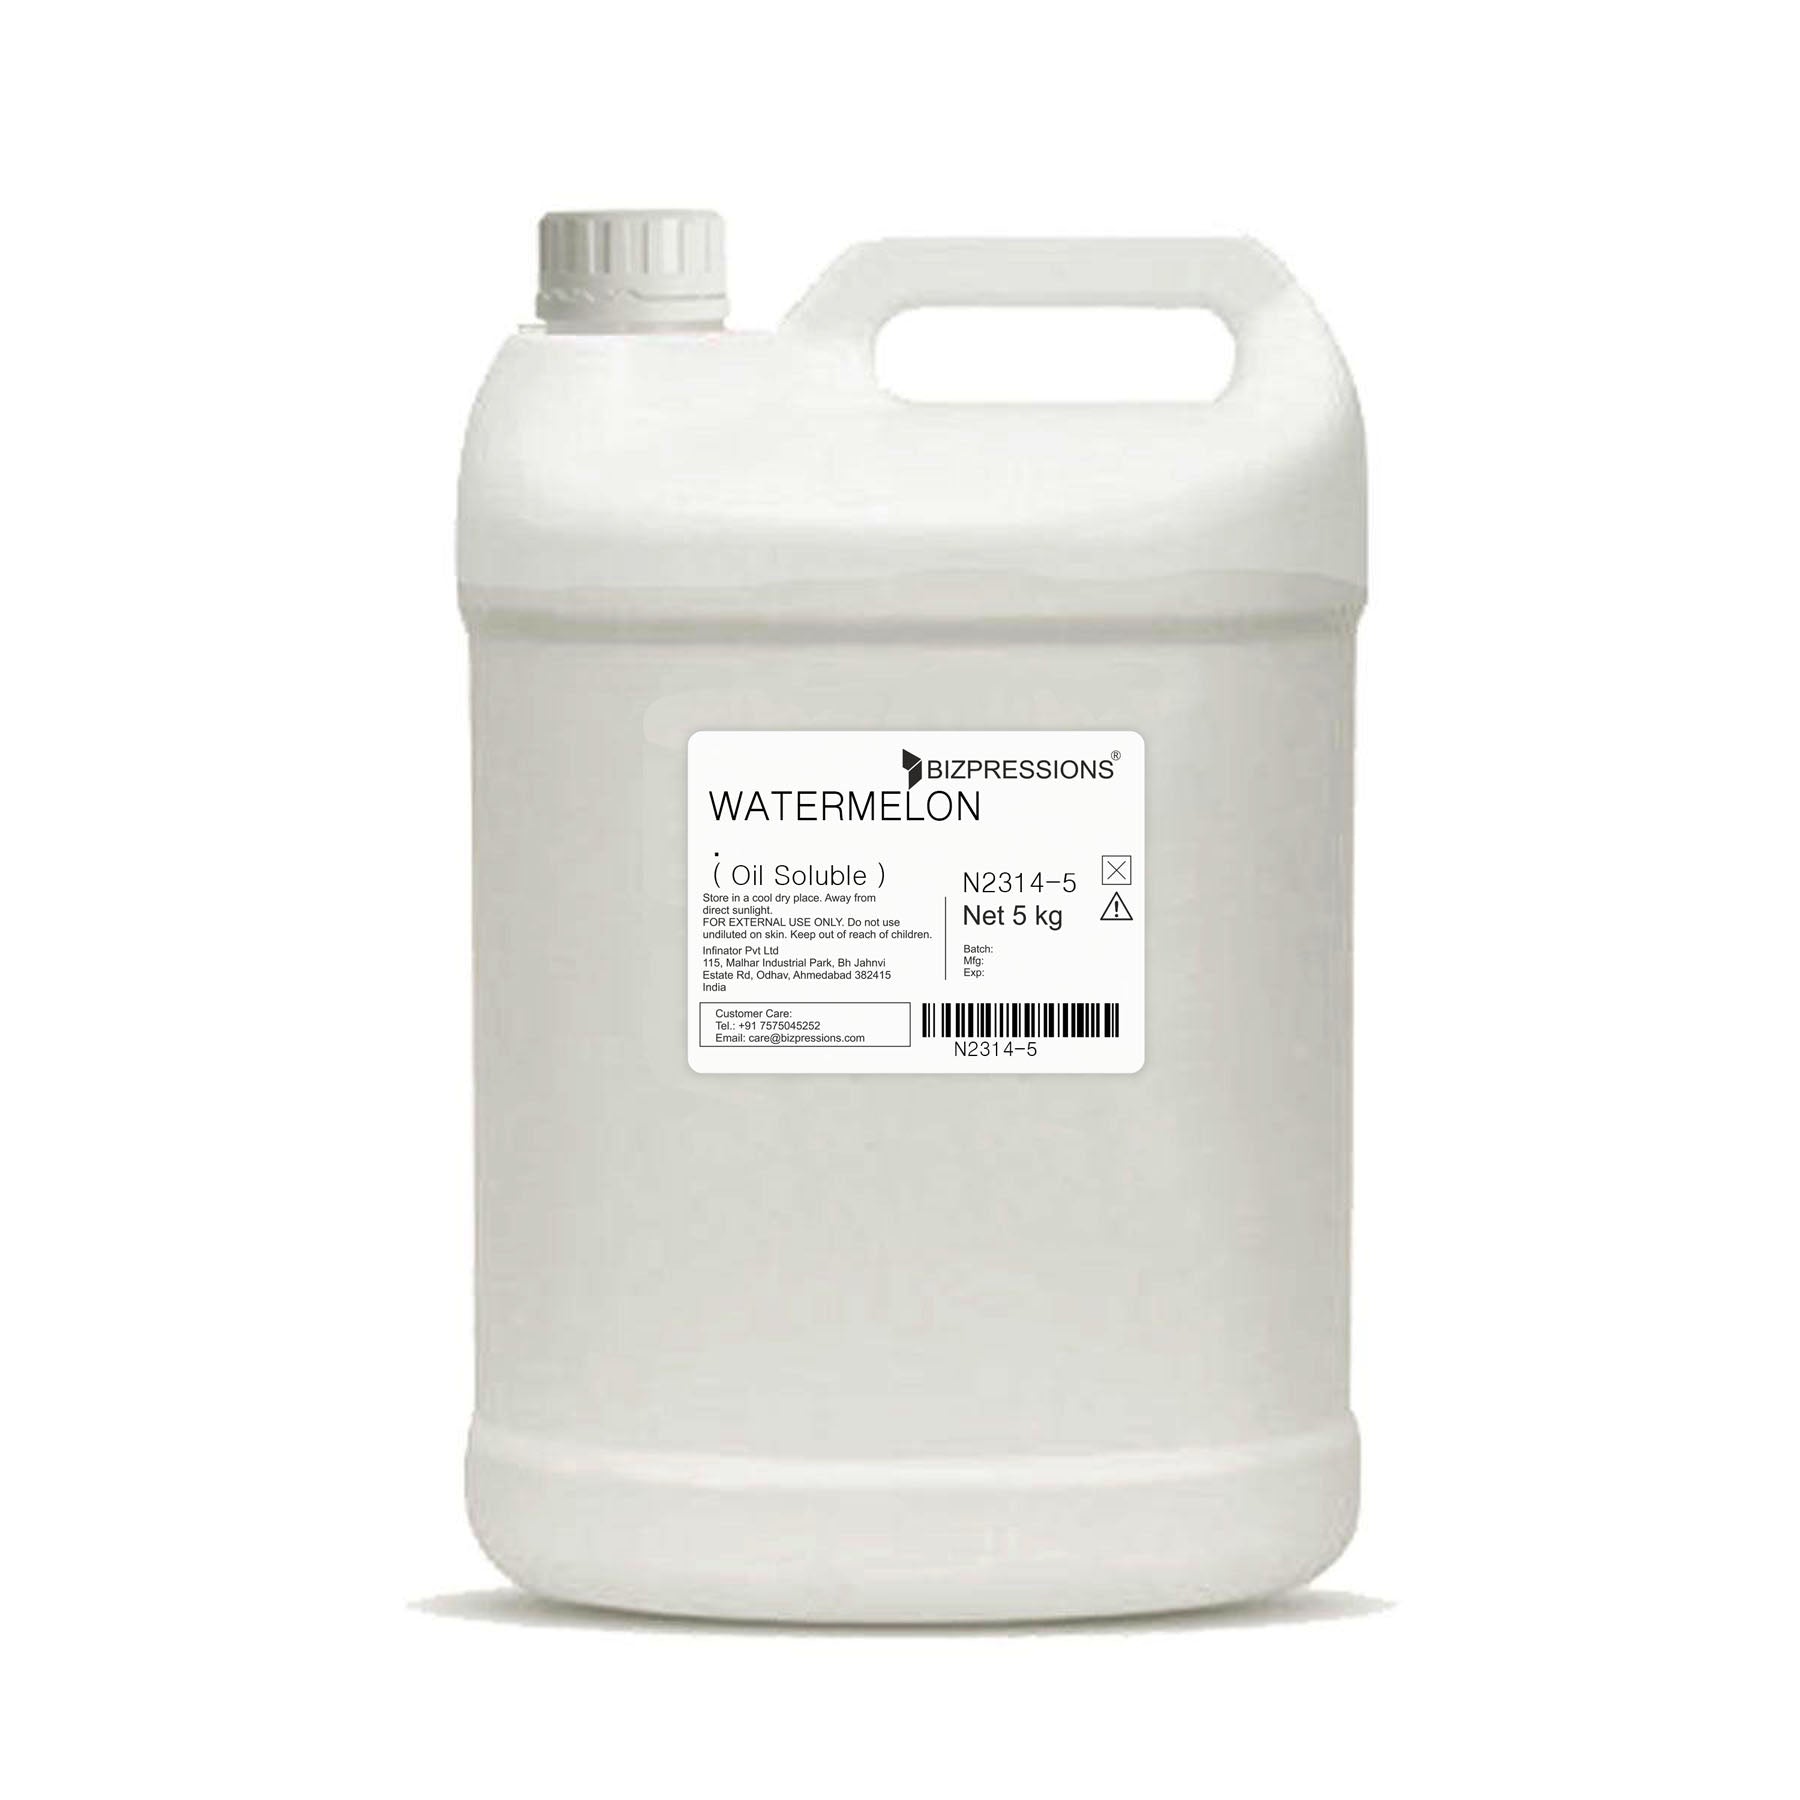 WATERMELON - Fragrance ( Oil Soluble ) - 5 kg